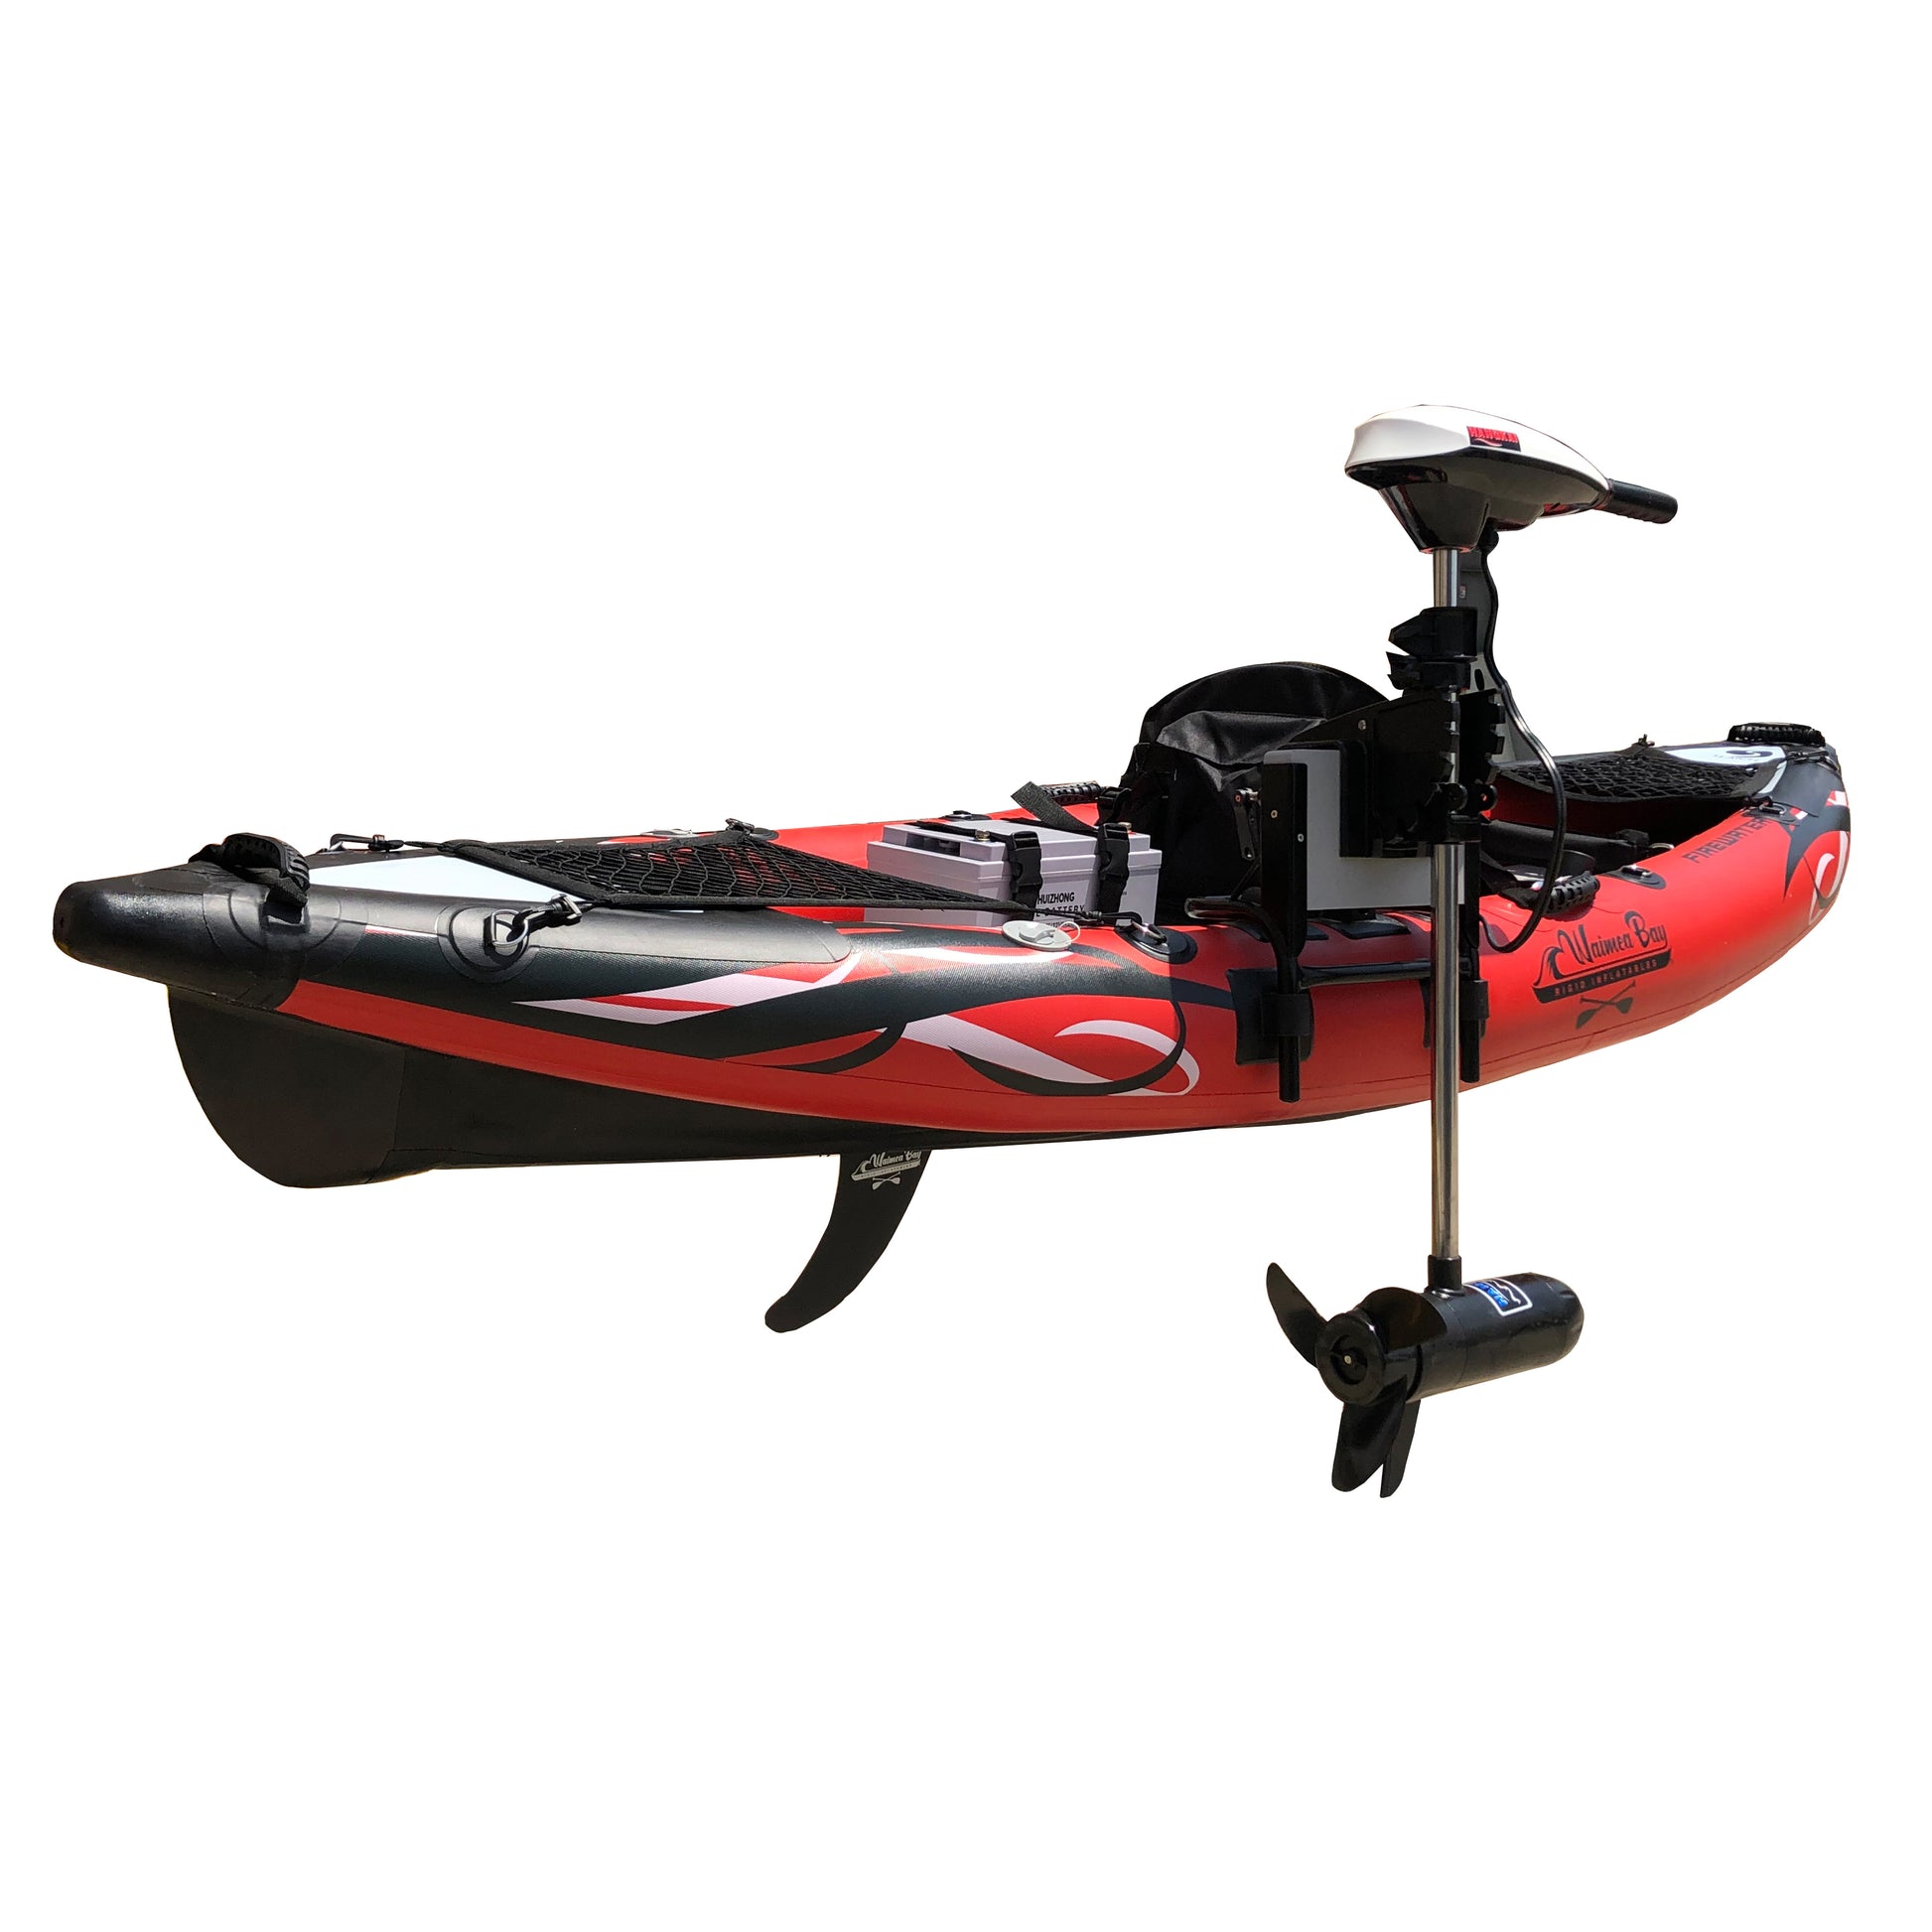 Shockwave Inflatable Kayak – Waimea Bay Rigid Inflatables